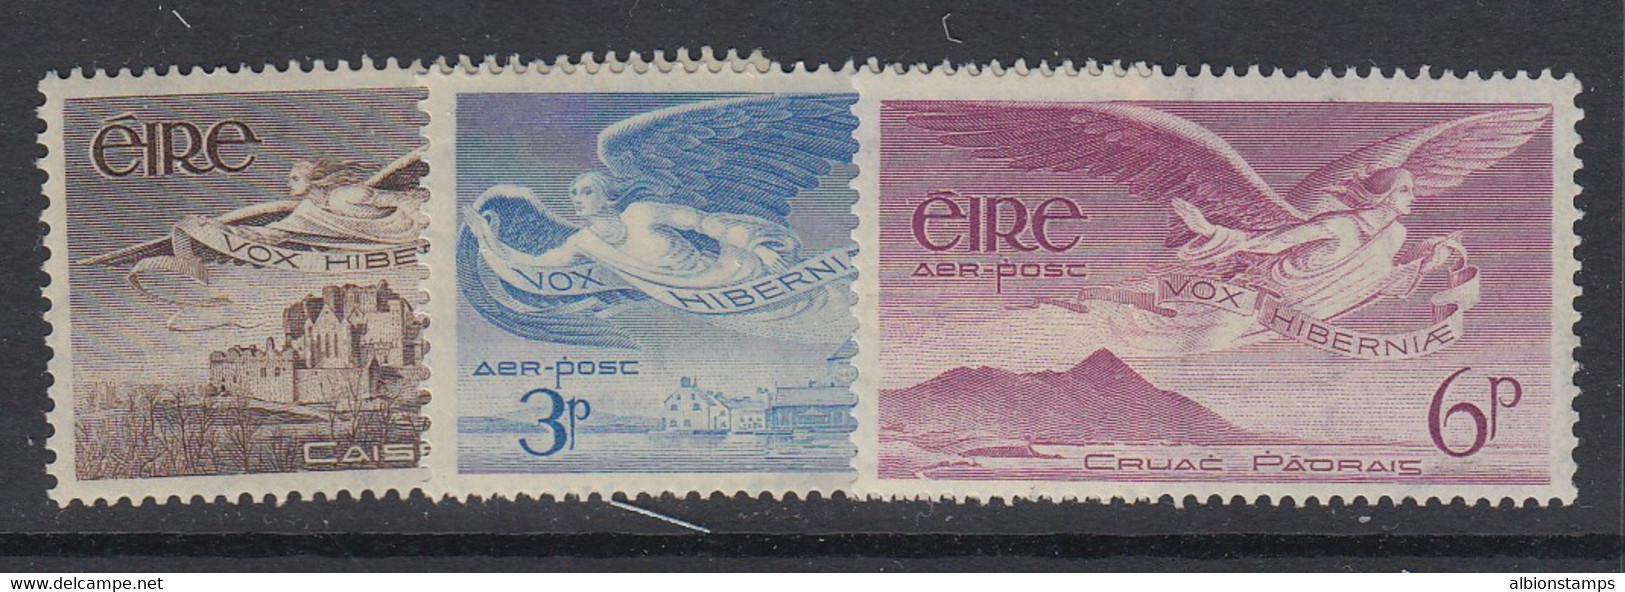 Ireland, Scott C1-C3 (SG 140-142), MLH - Airmail